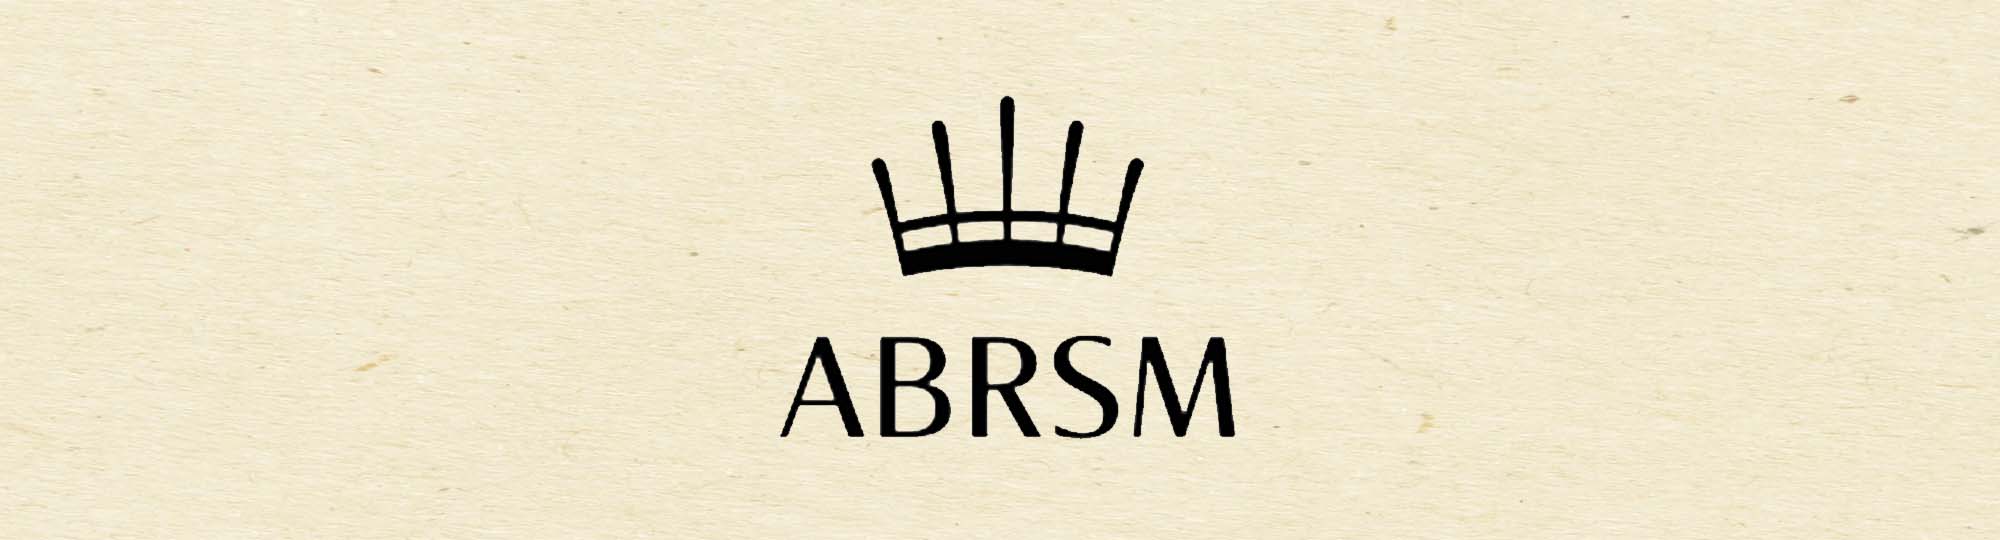 Exames ABRSM